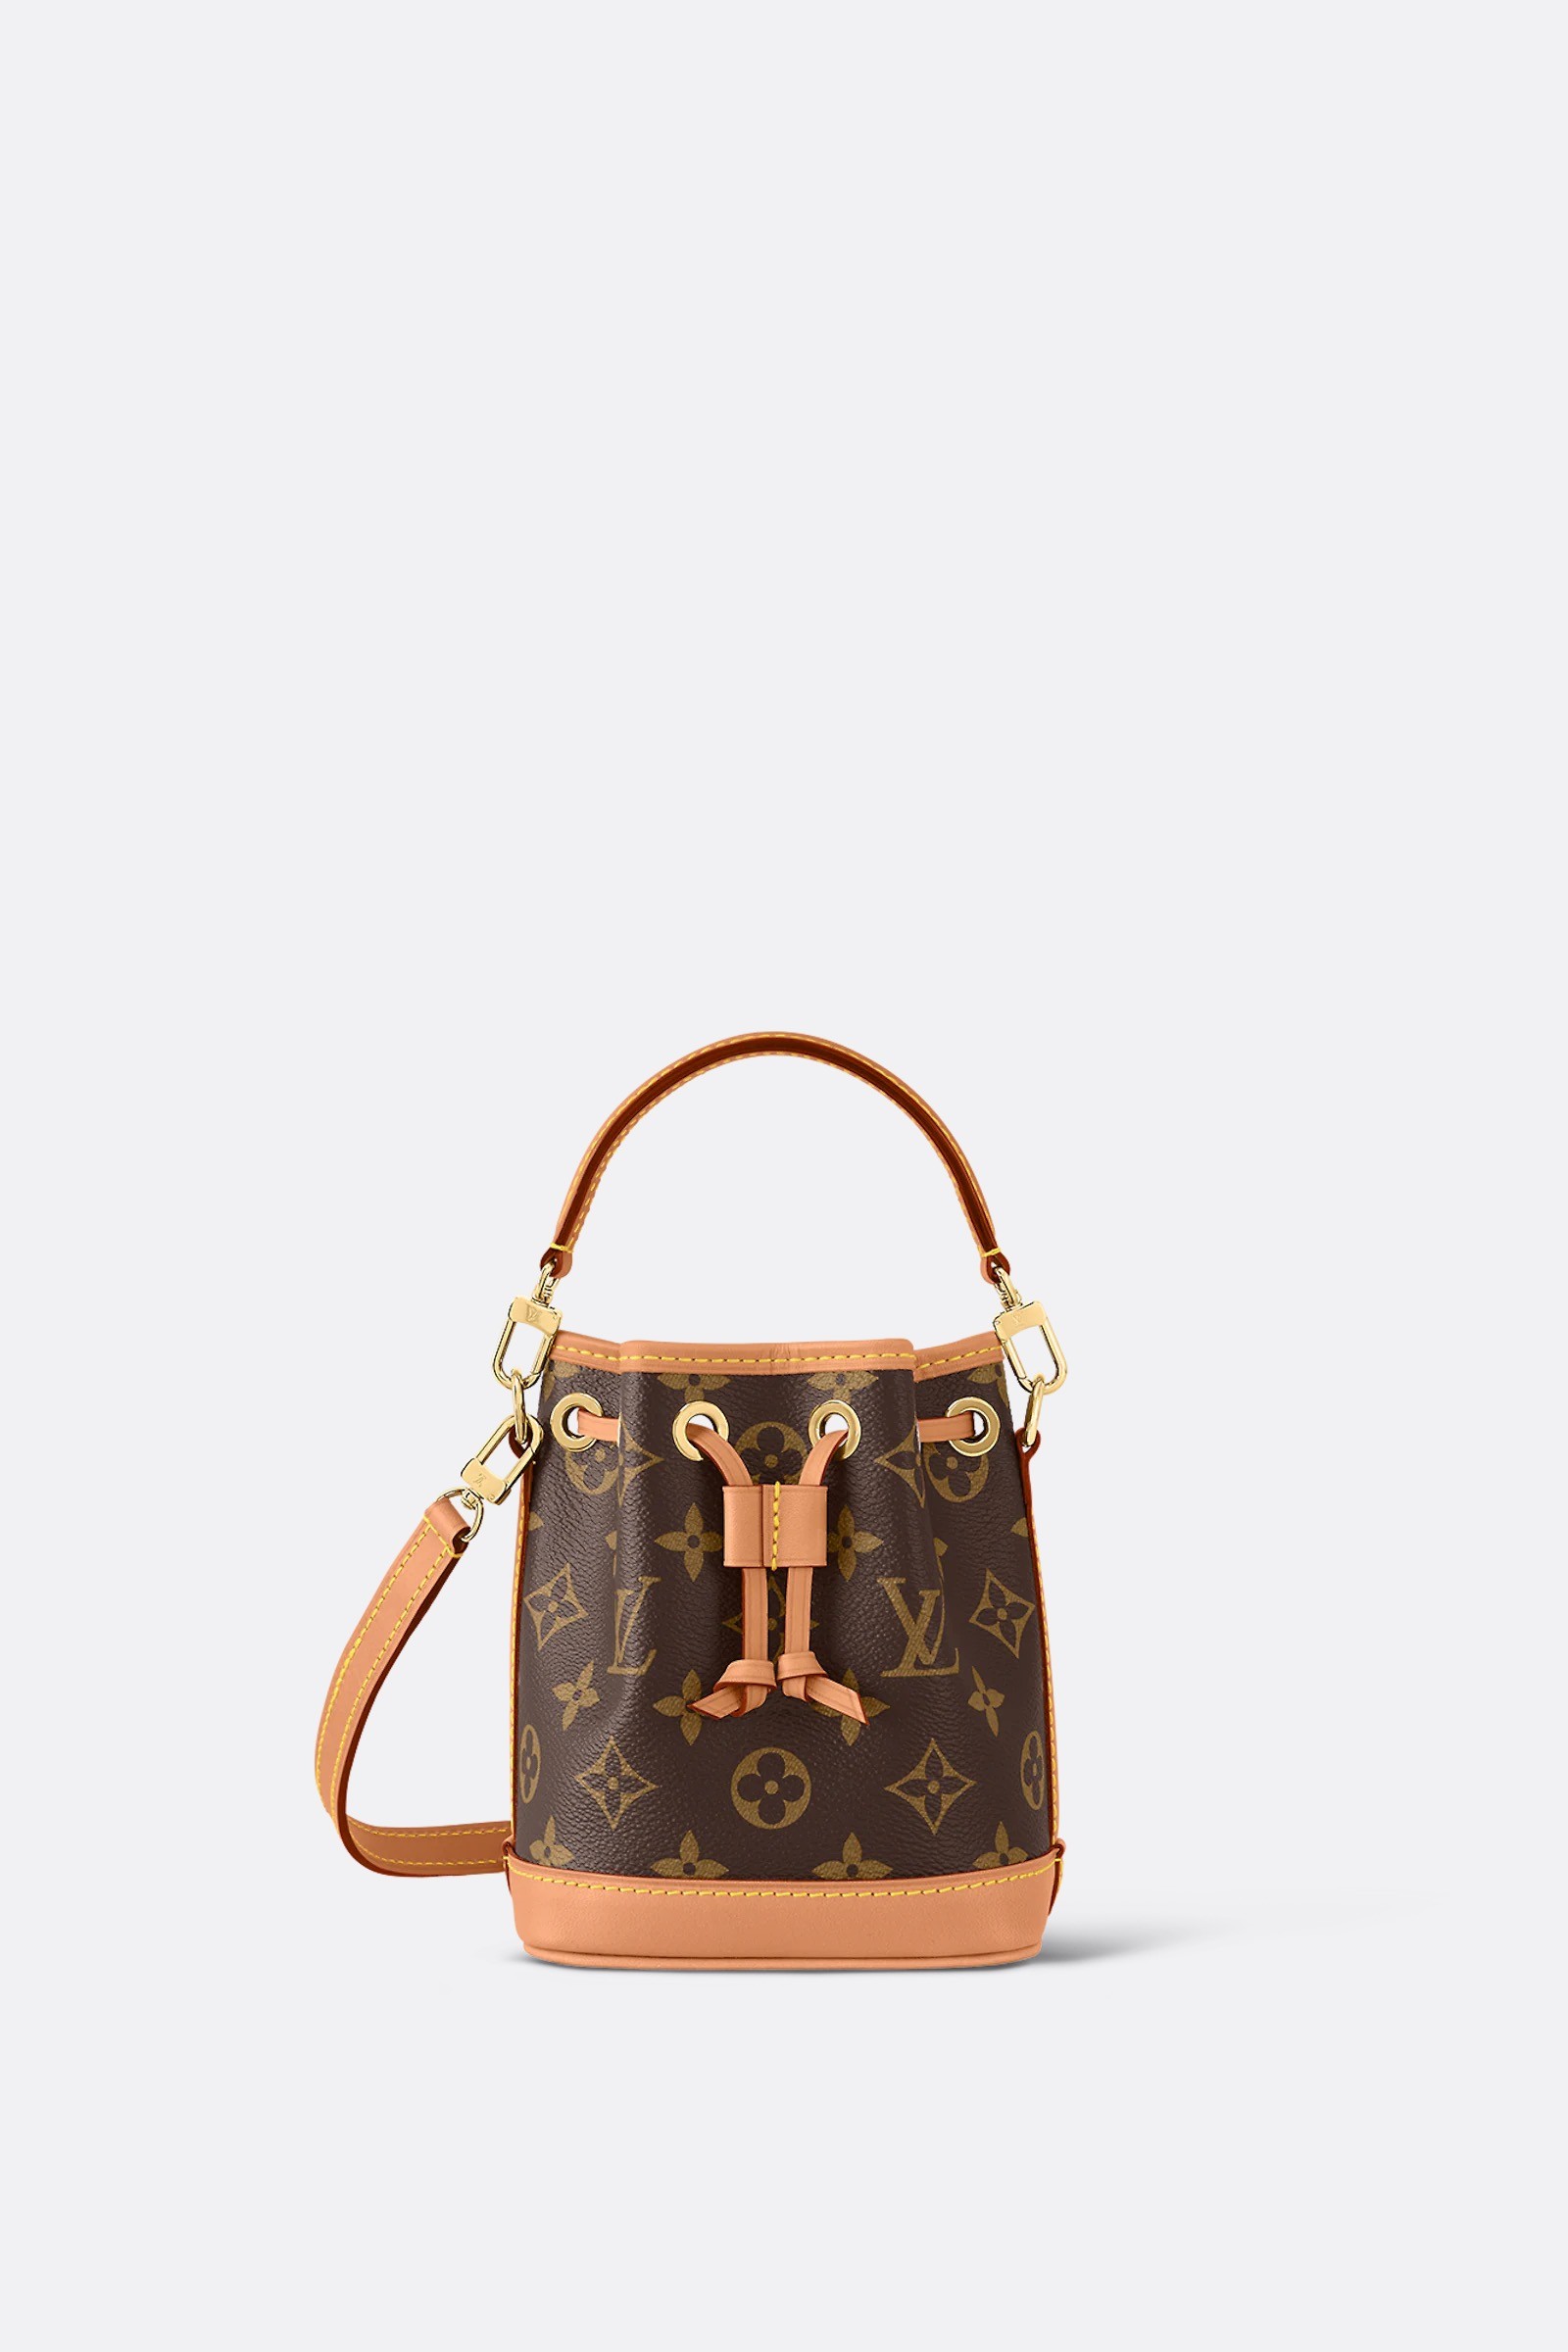 Shop Luxury Mini Bags From Worldwide Designers Brands – Shop It